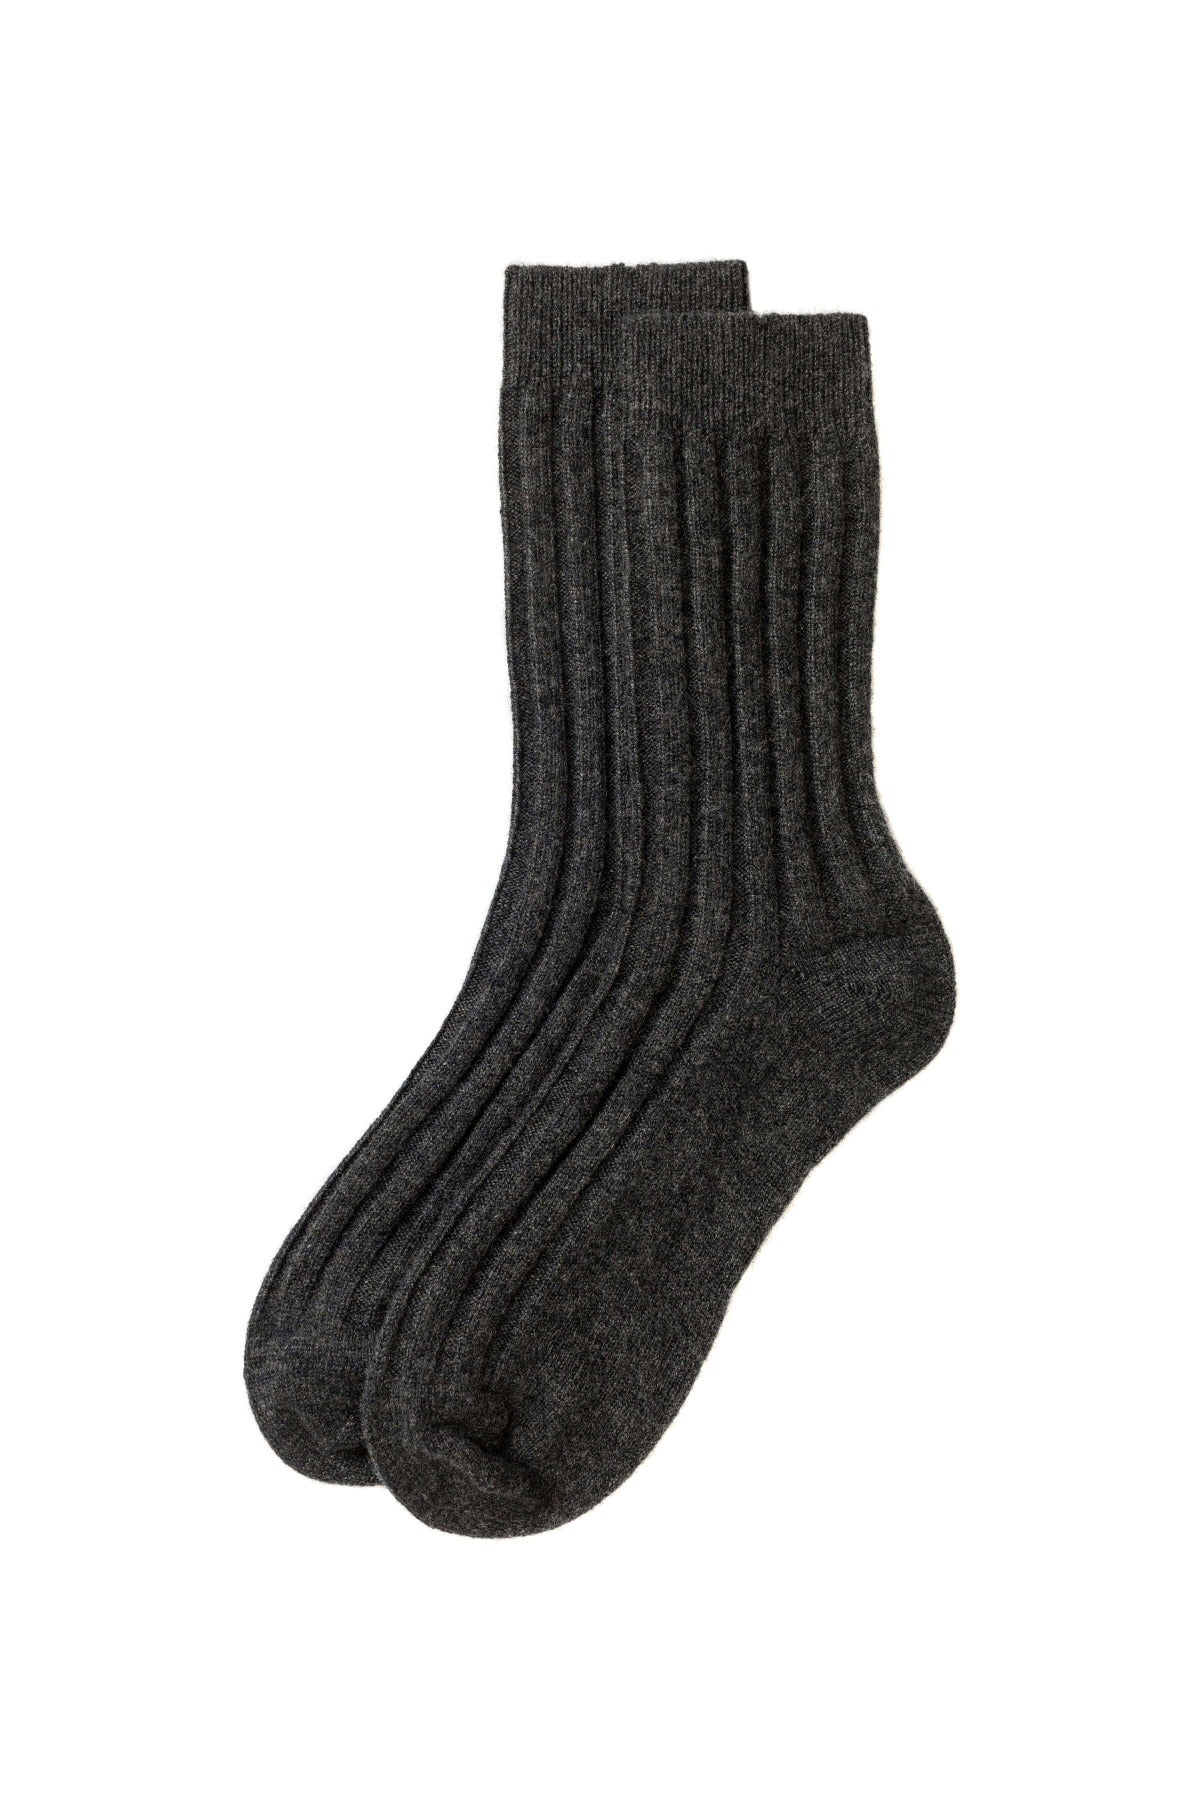 Johnstons of Elgin Men's Cashmere Bed Sock in Dark grey  HAG02814HA4168